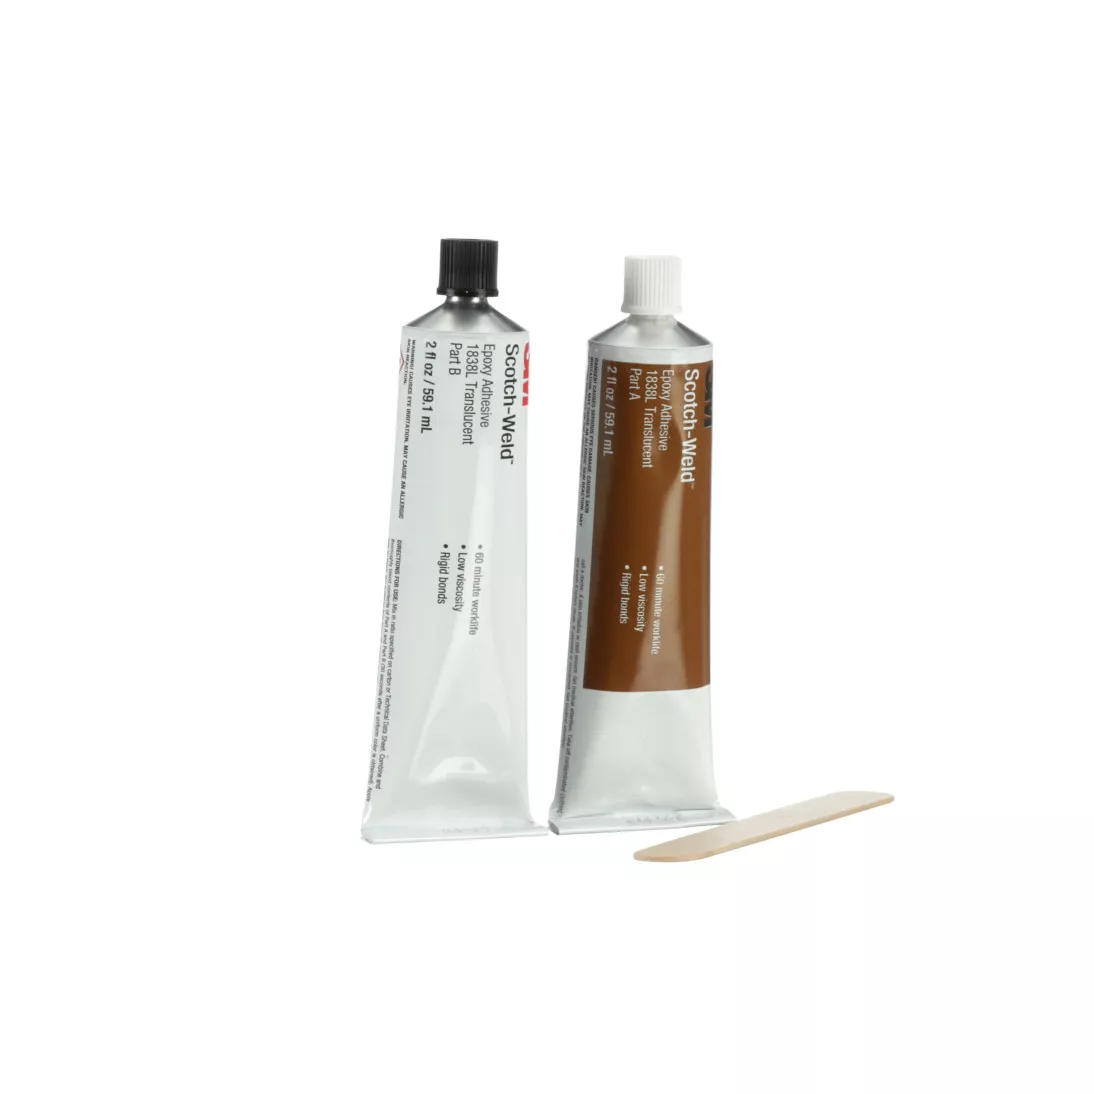 3M™ Scotch-Weld™ Epoxy Adhesive 1838L, Translucent, Part B/A, 2 fl oz
Tube Kit, 6/case